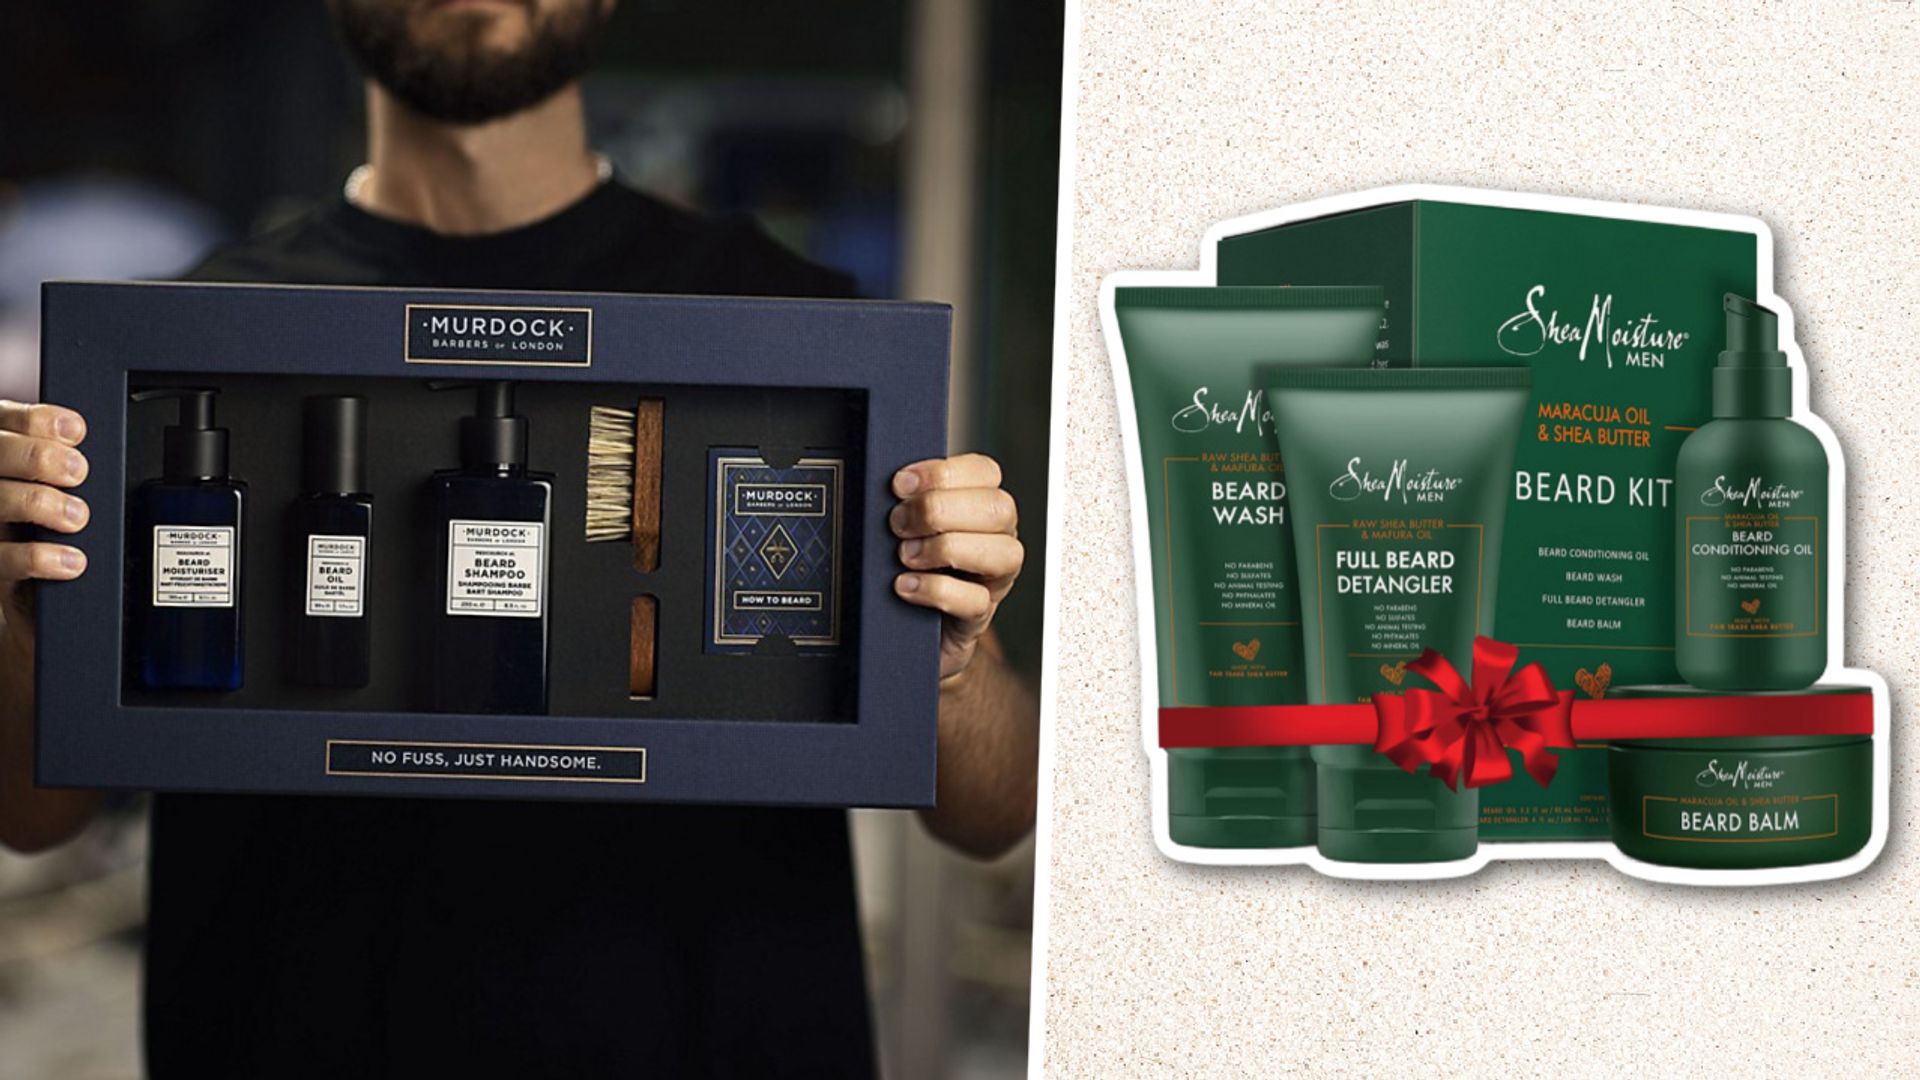 9 best beard grooming kits to keep his facial hair looking sharp - plus expert beard care advice